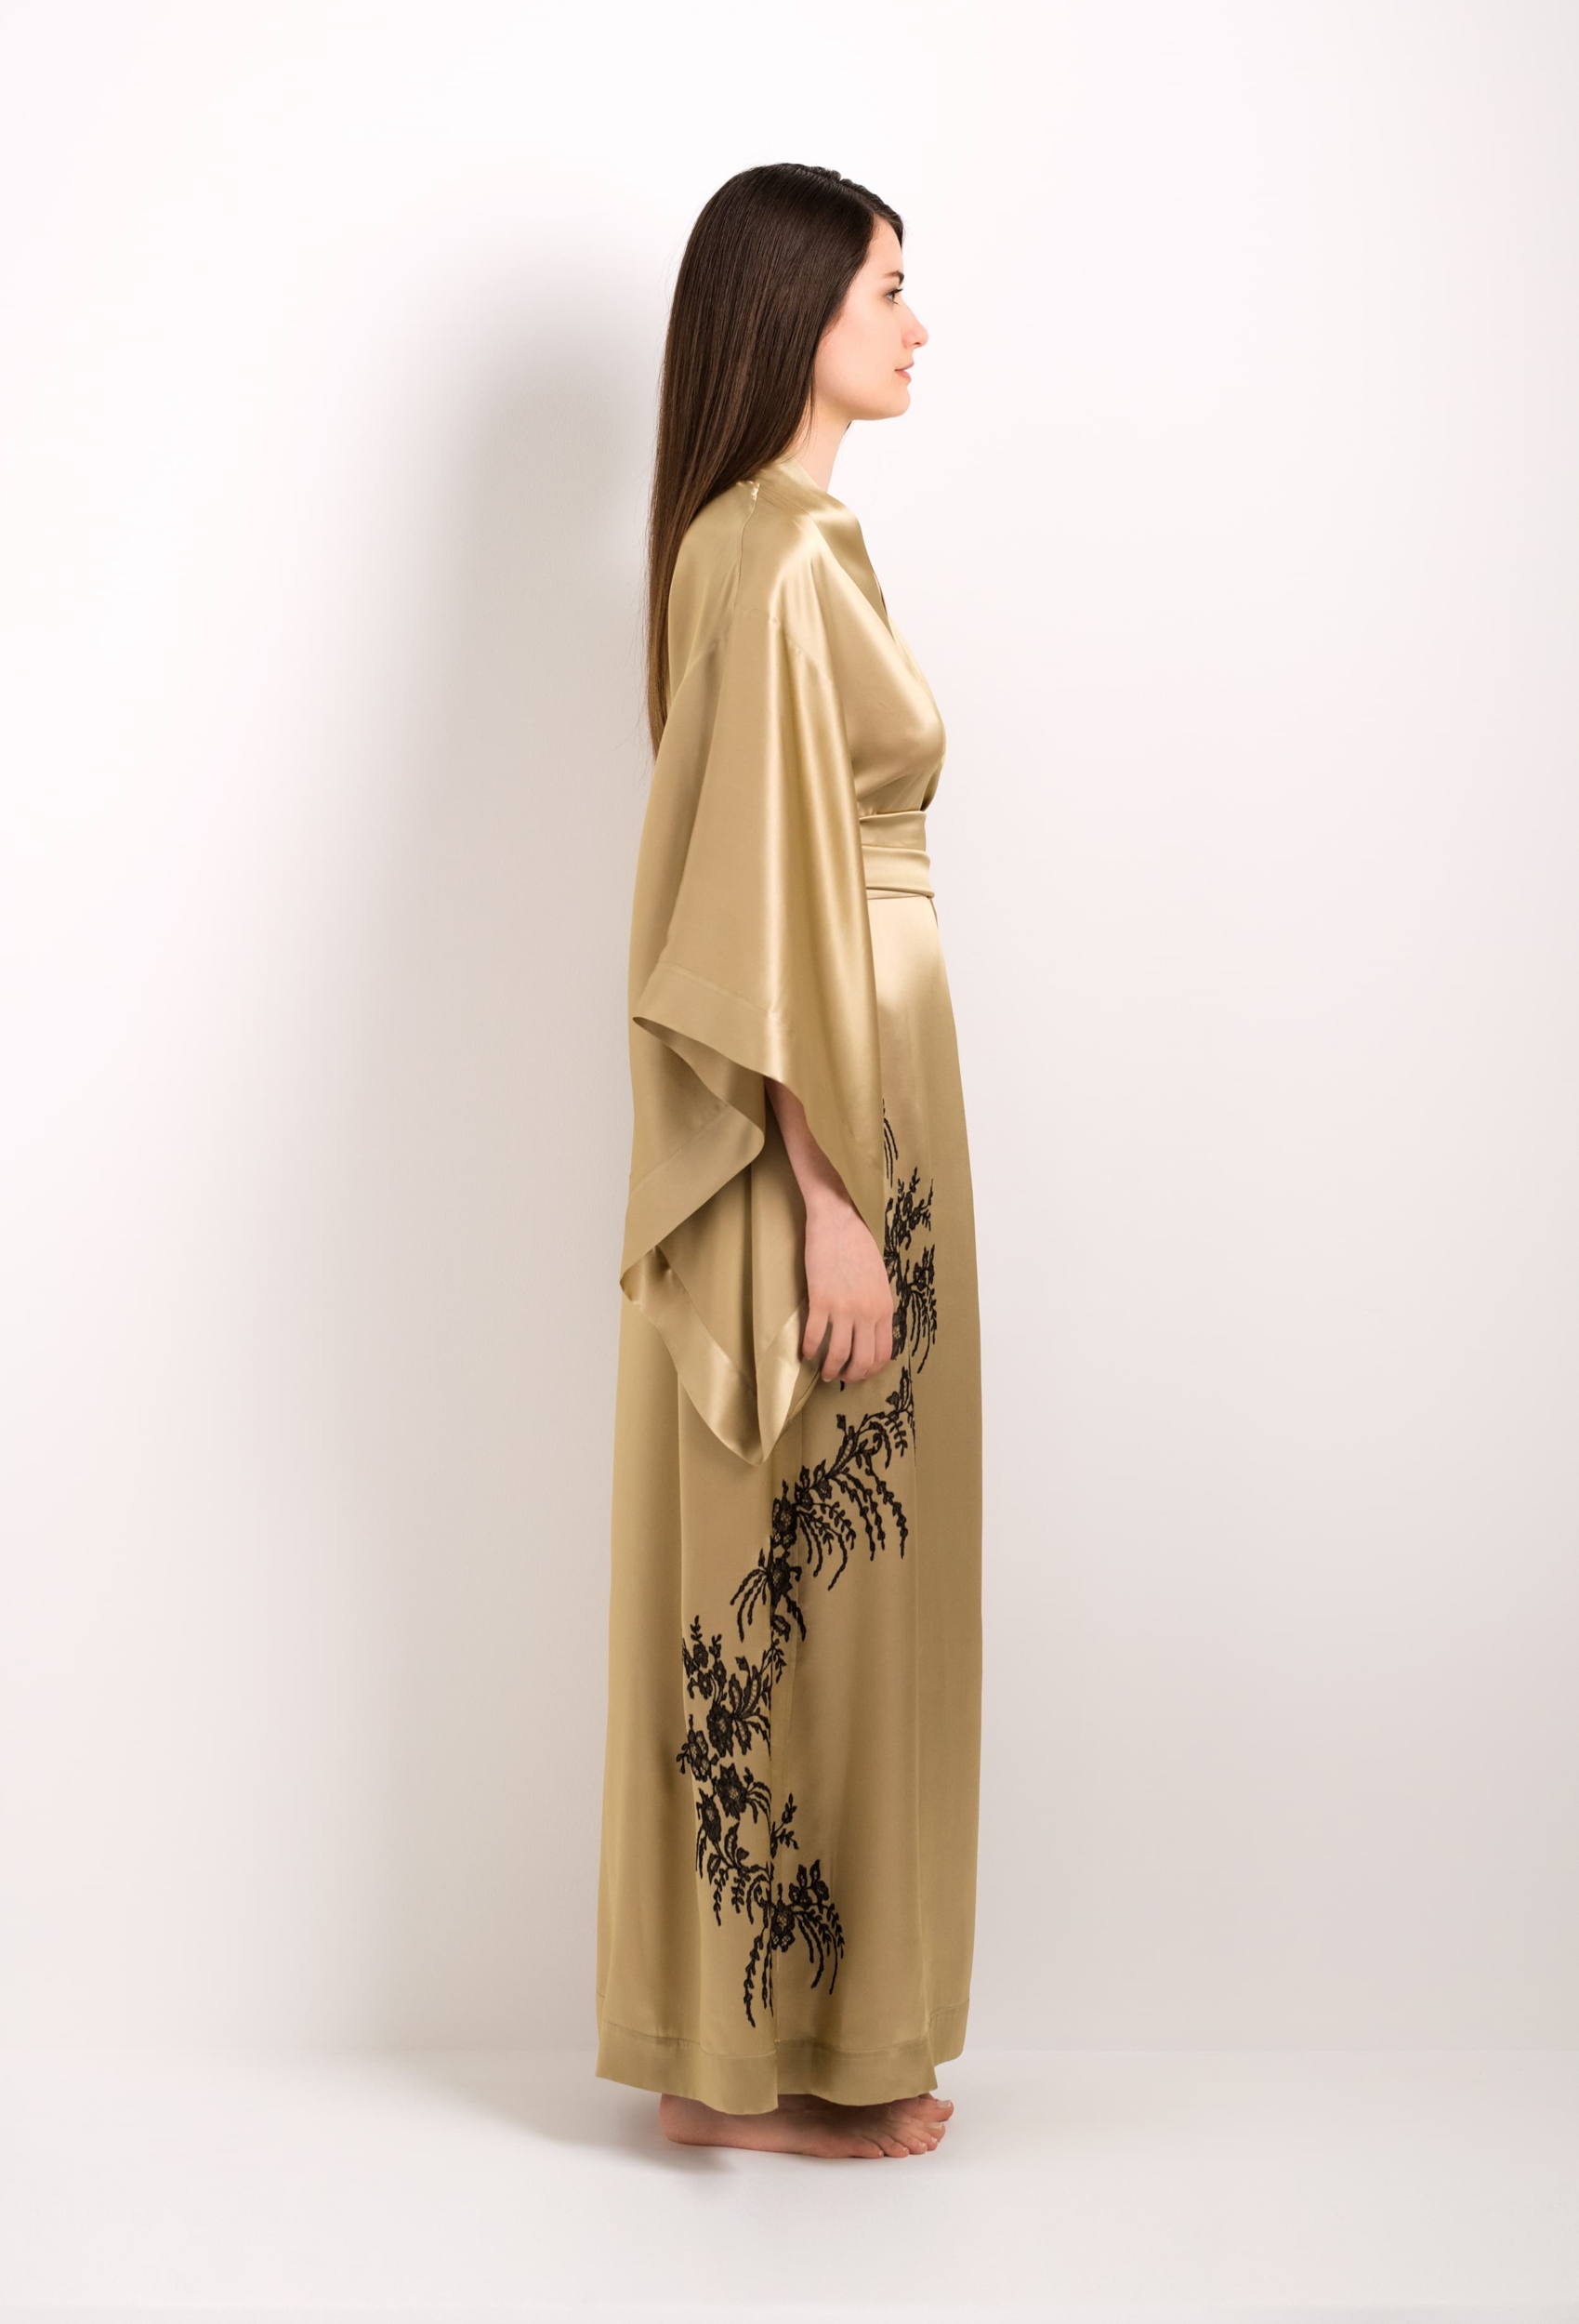 Long silk kimono - gold and black Venise Caudry lace - Carine Gilson | Kimonos